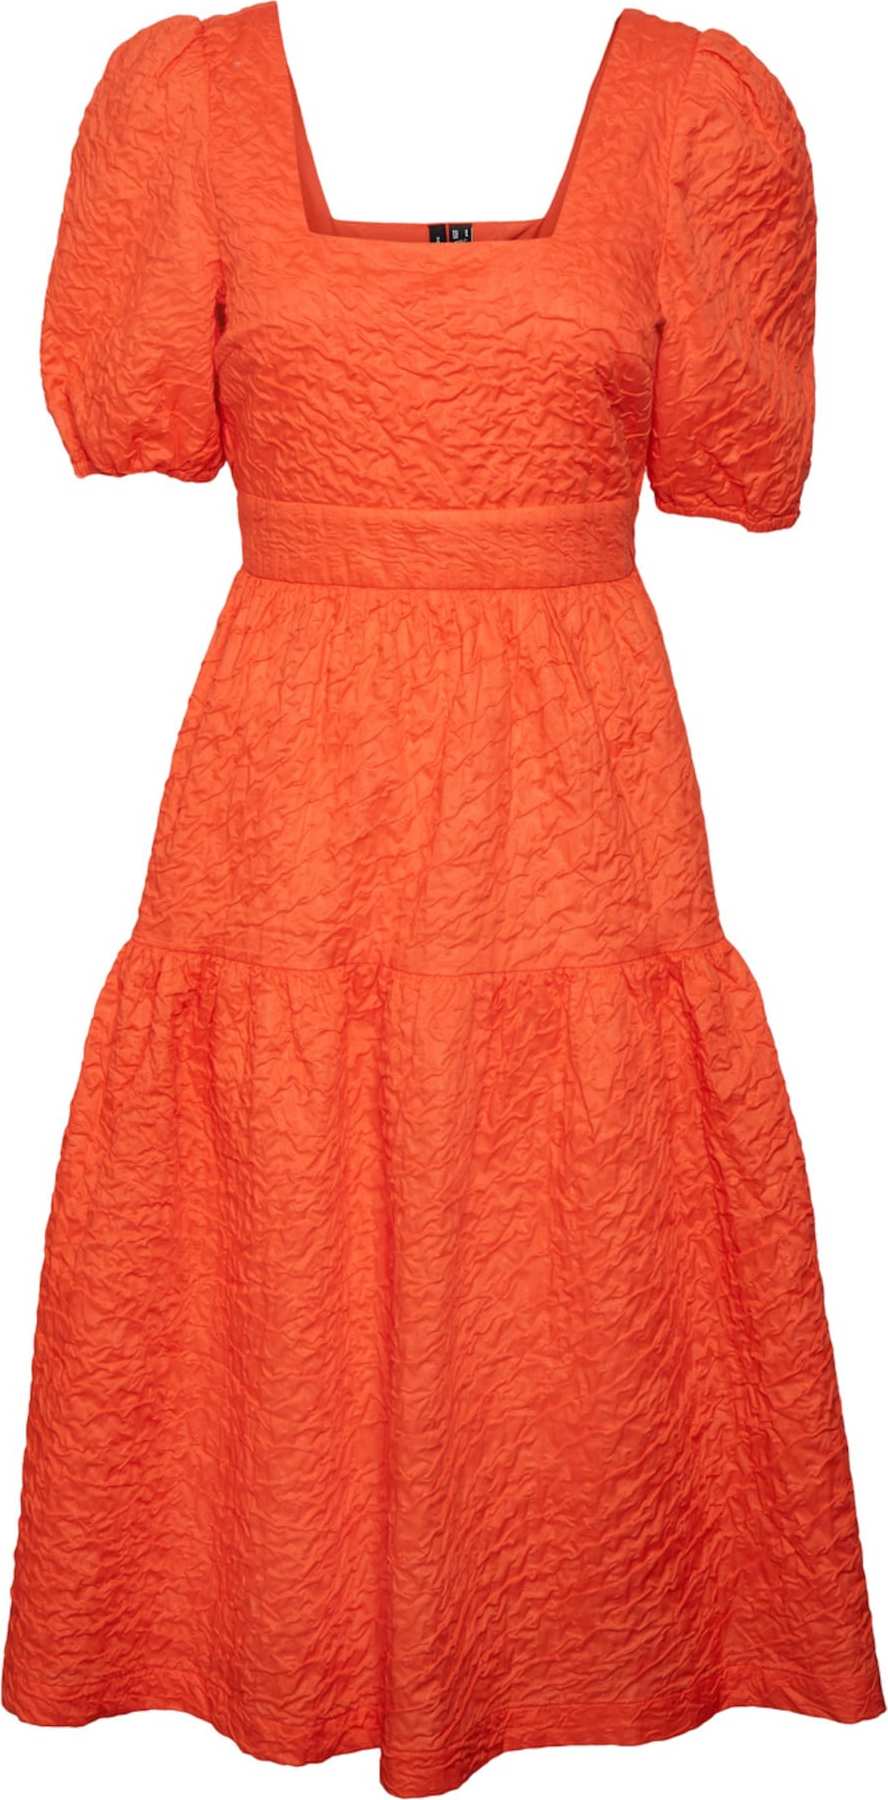 VERO MODA Šaty oranžově červená